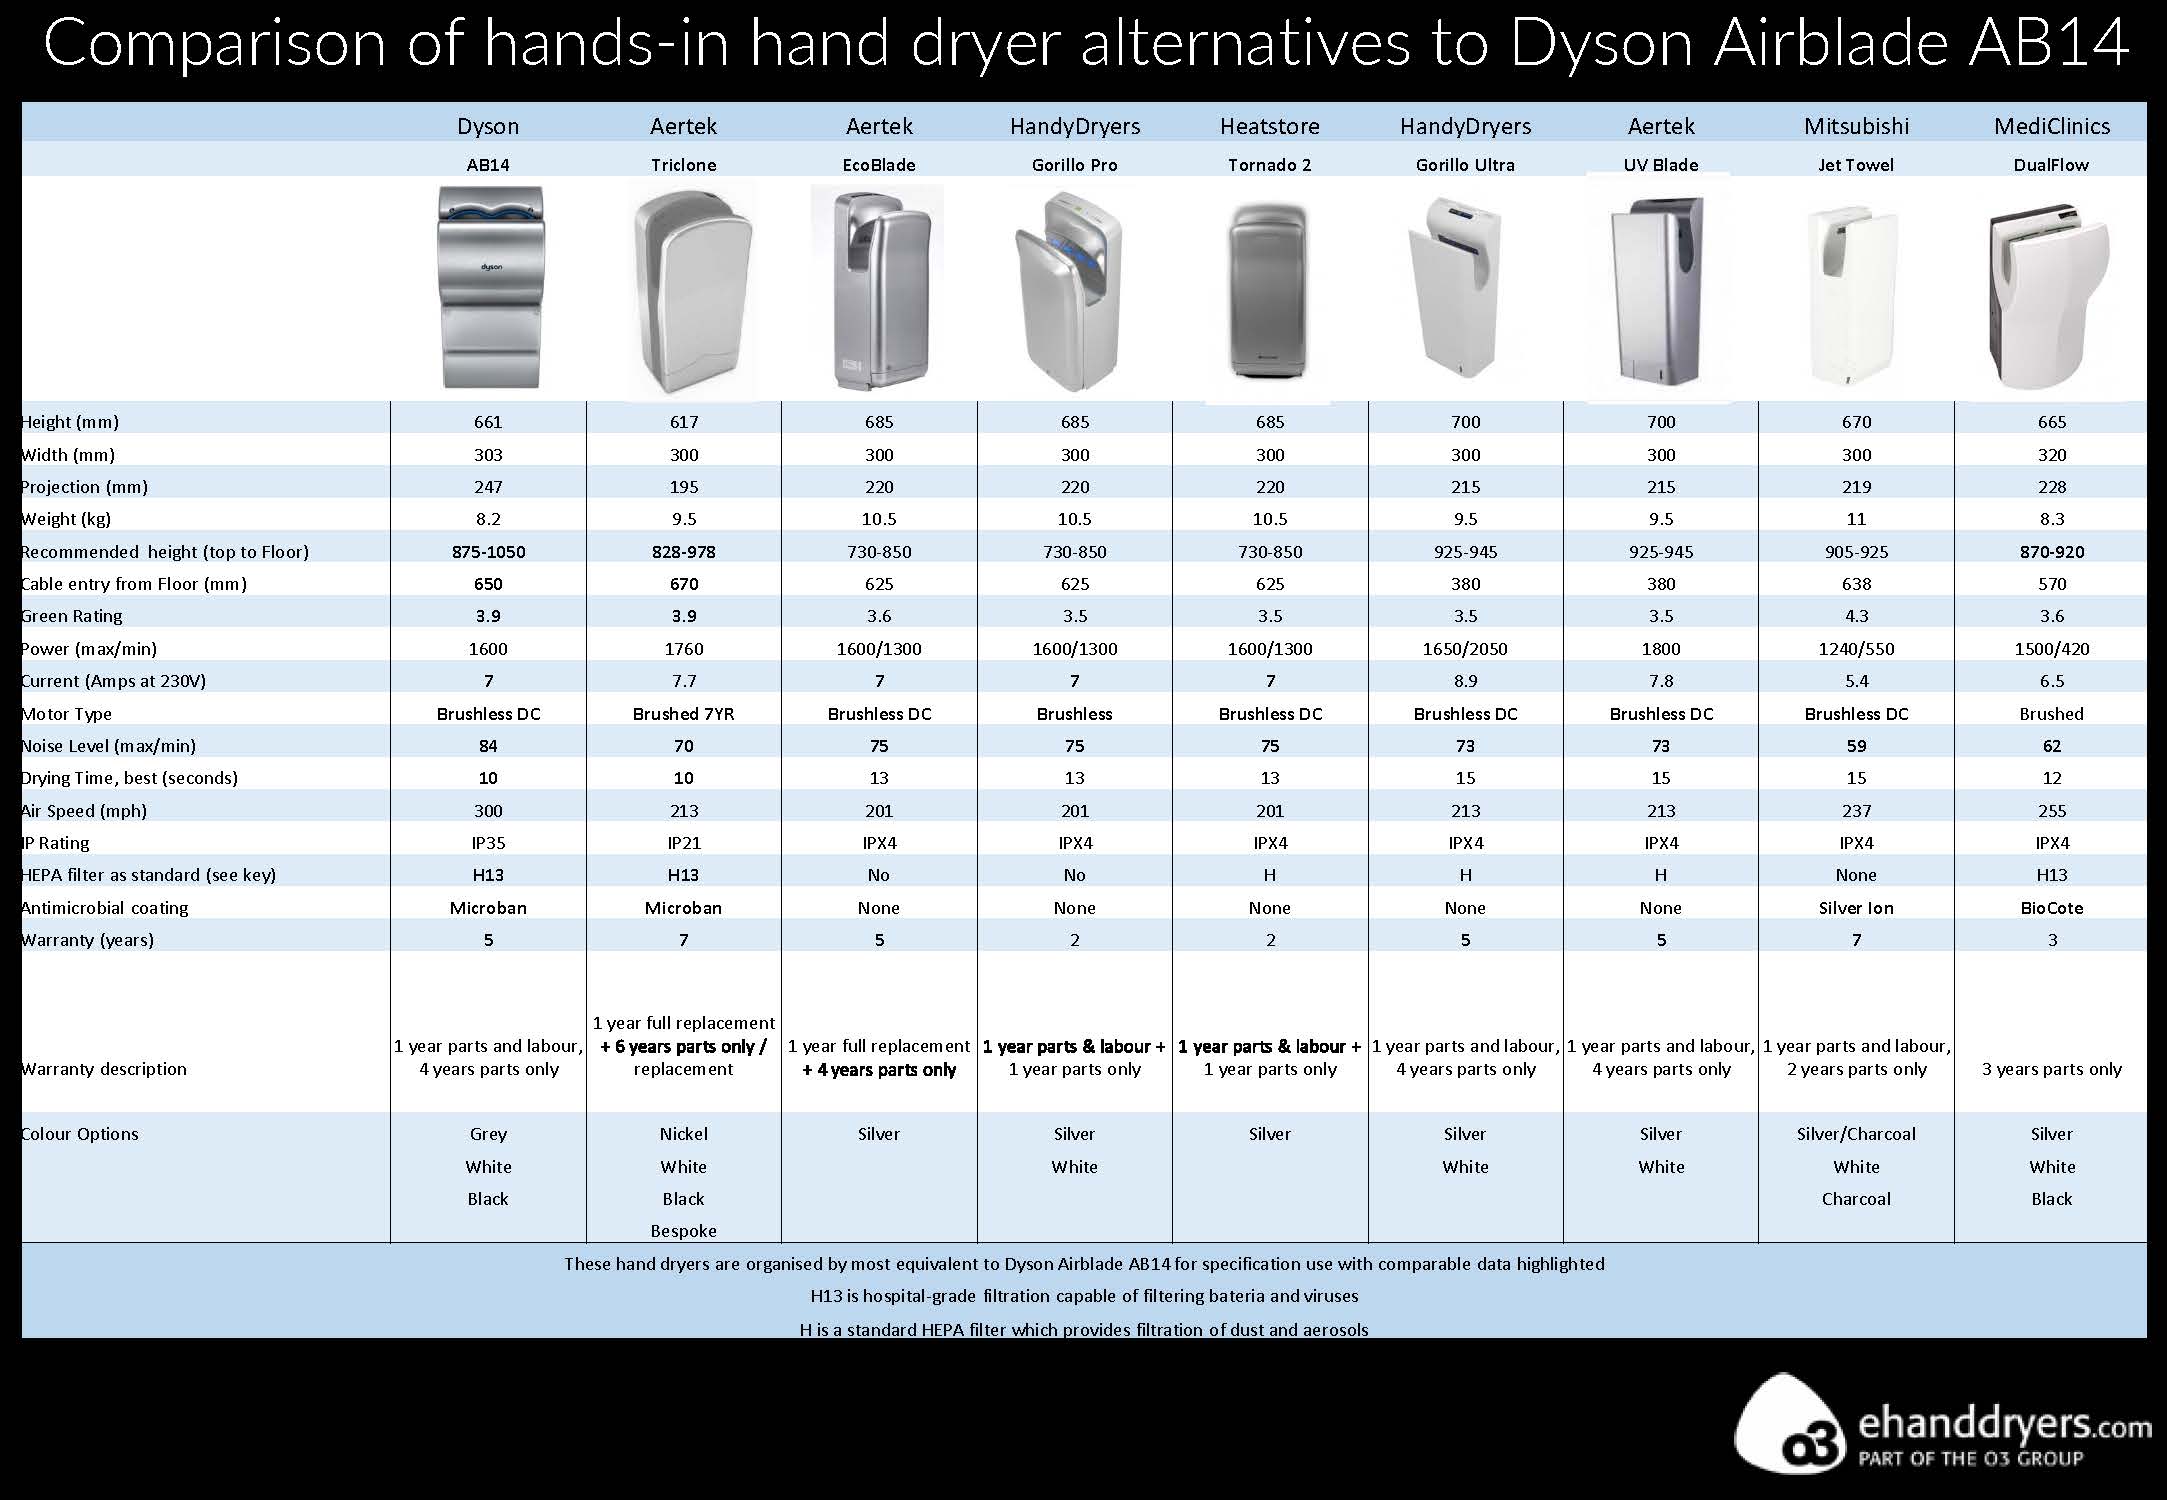 Dyson Airblade AB14 alternatives